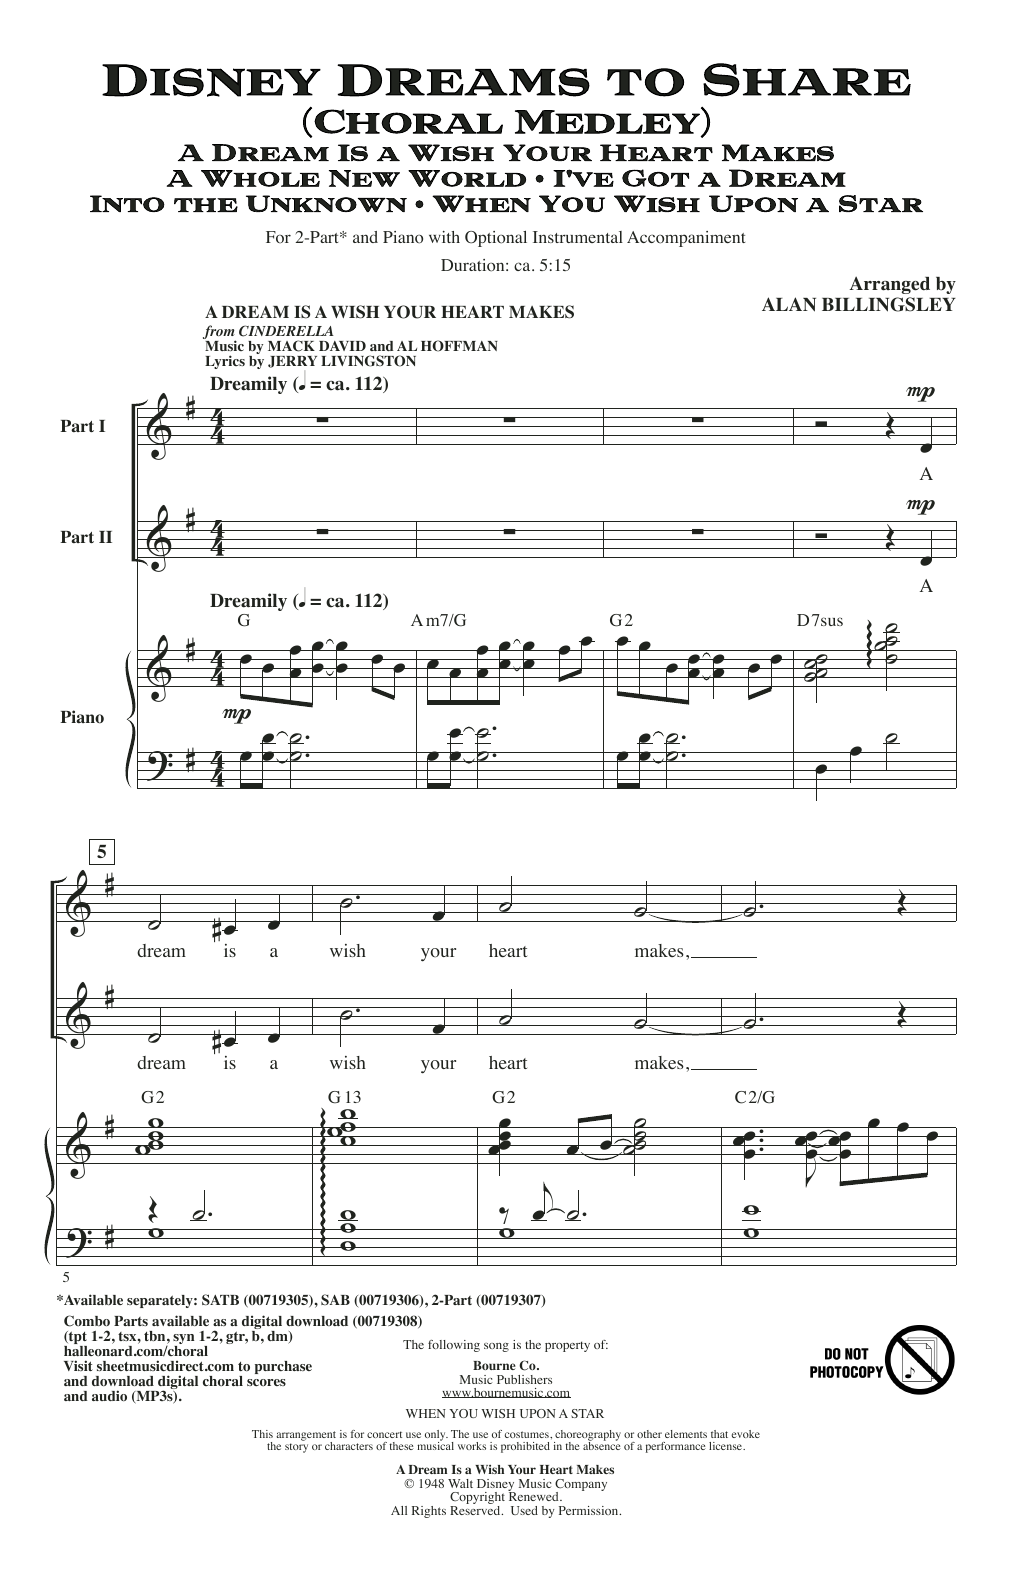 Alan Billingsley Disney Dreams To Share (Choral Medley) Sheet Music Notes & Chords for SATB Choir - Download or Print PDF